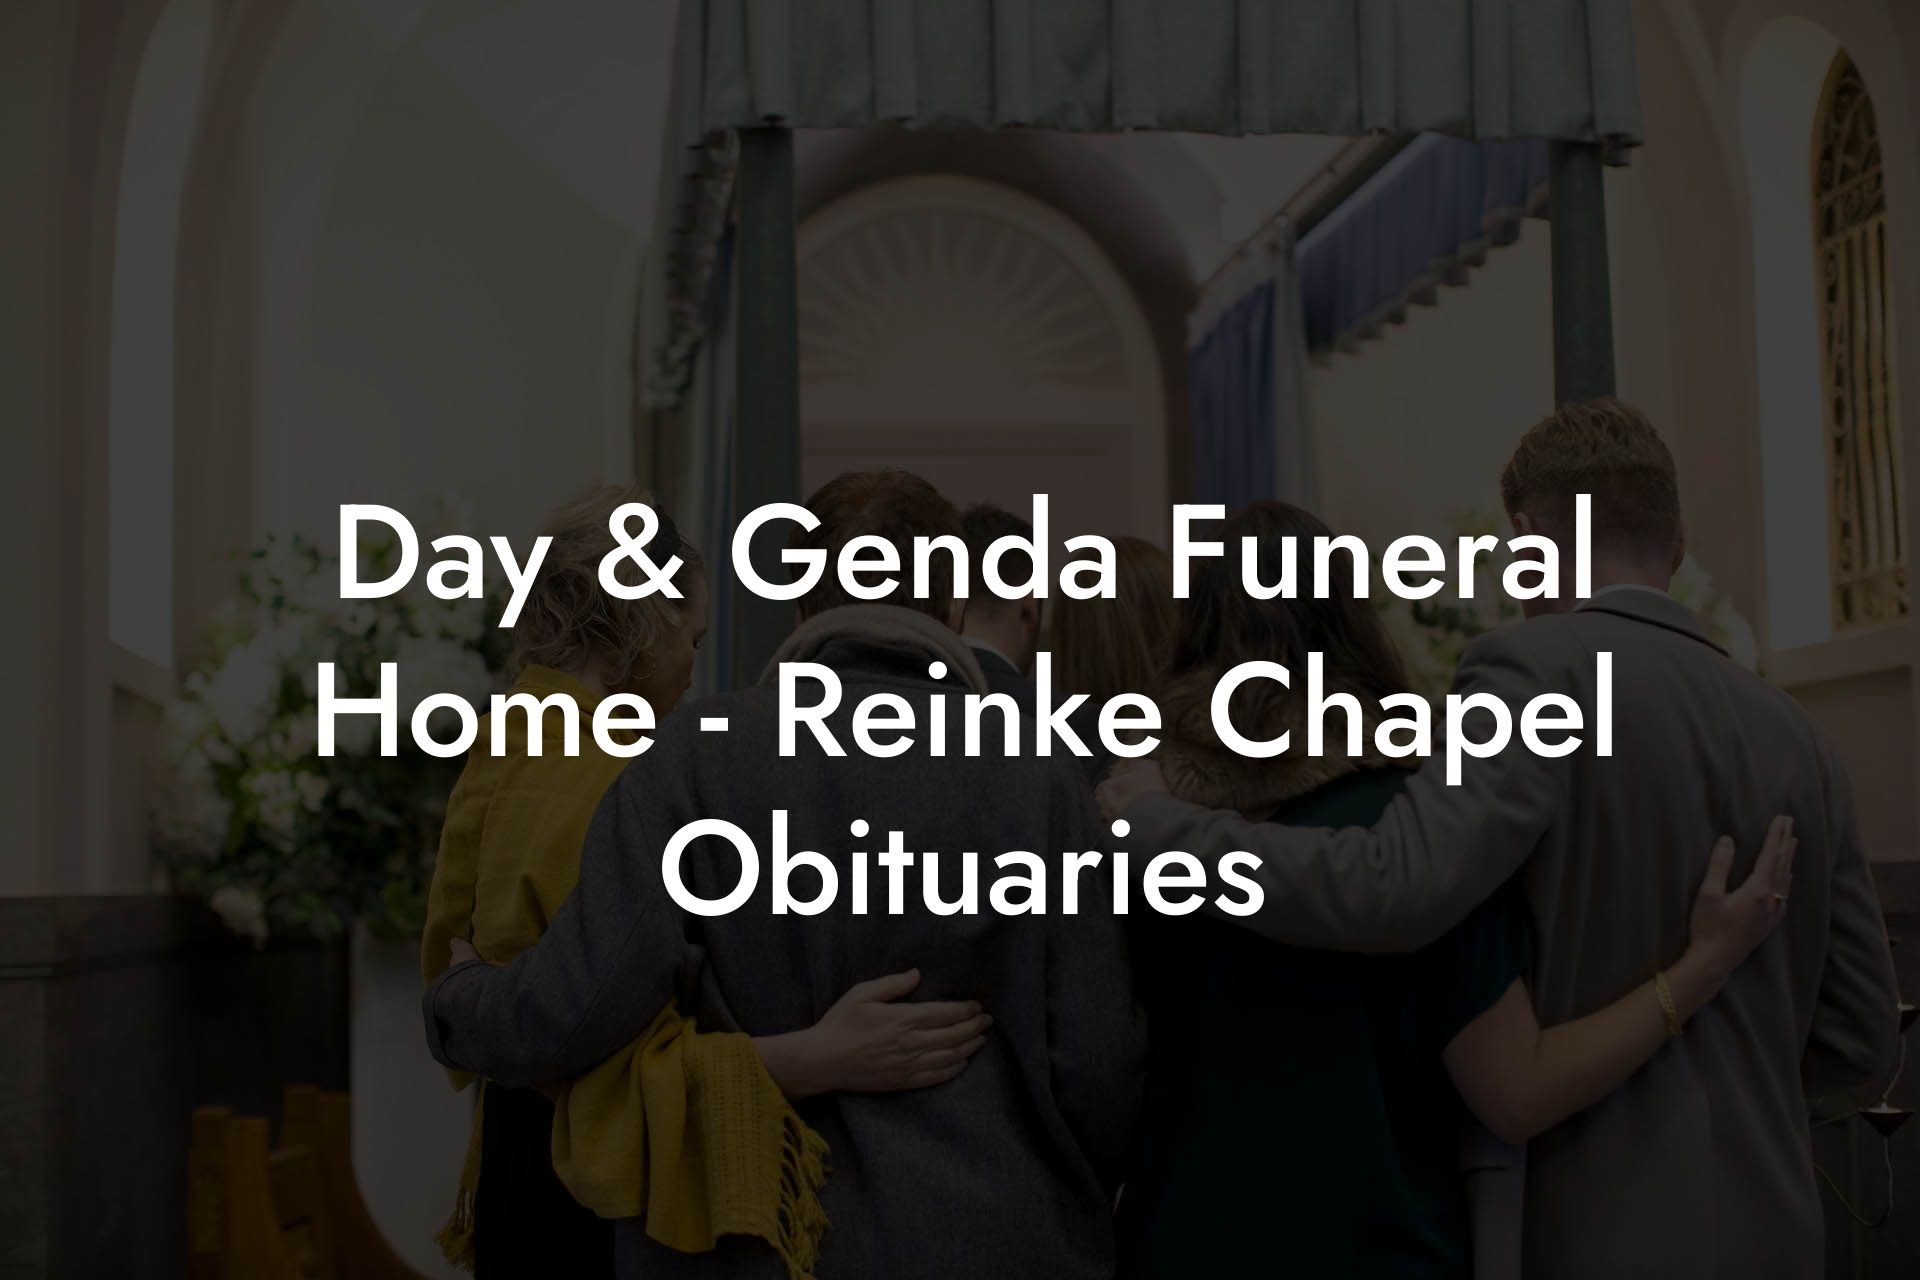 Day & Genda Funeral Home - Reinke Chapel Obituaries